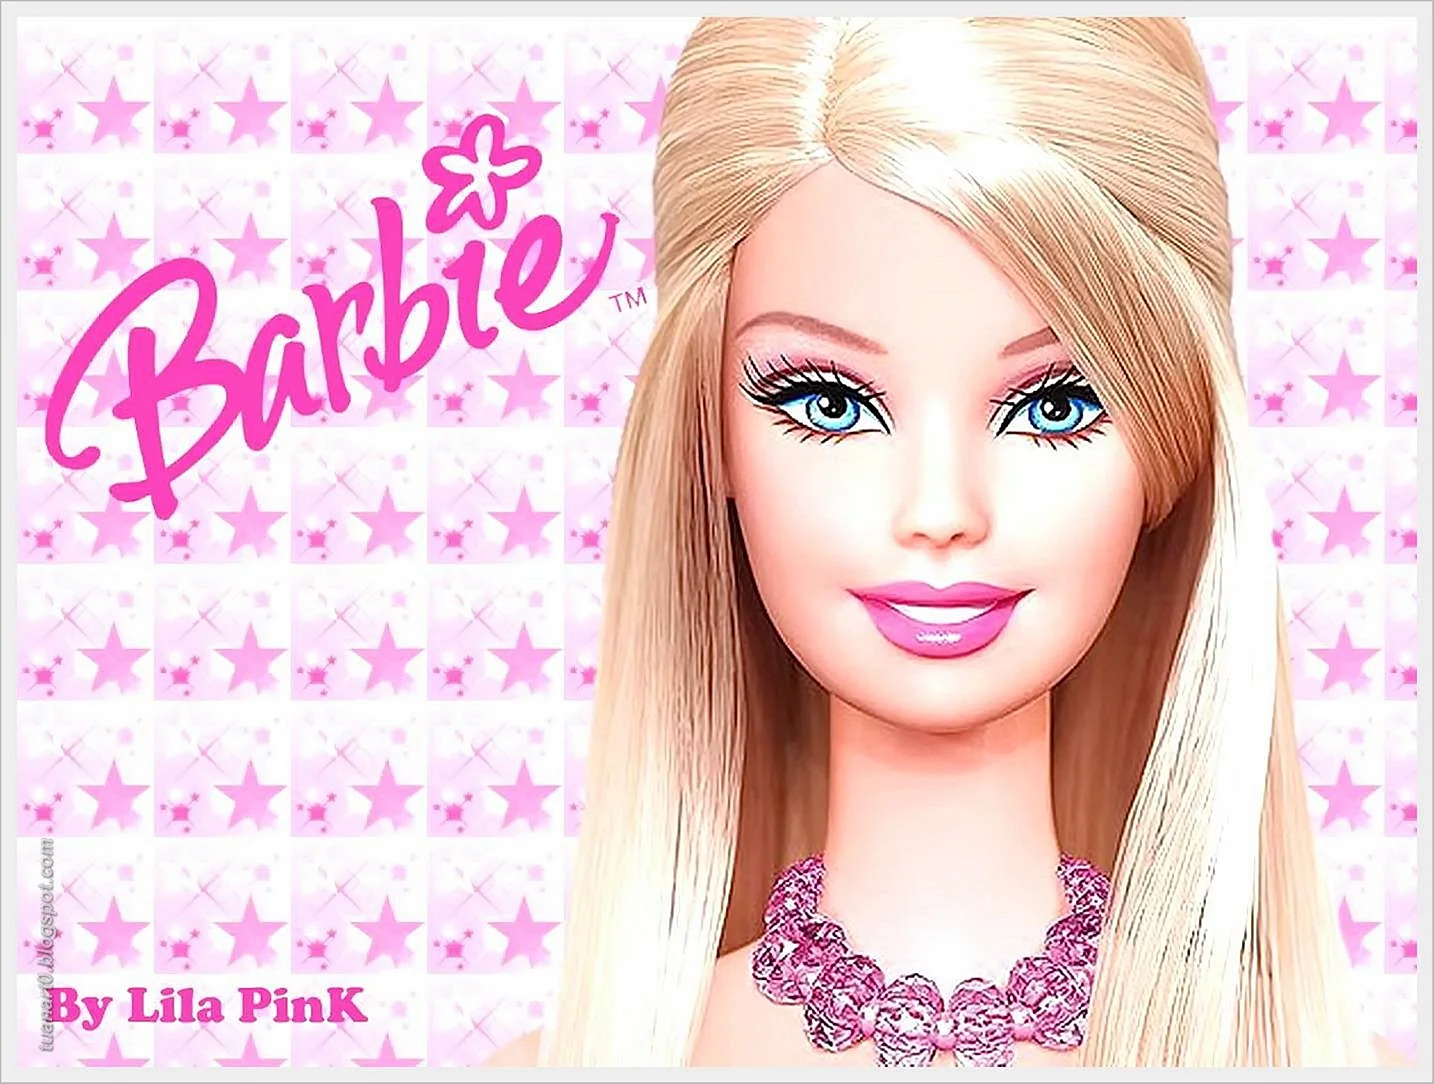 Barbiegirl. Барби Миллисент Робертс. Полное имя Барби - Барбара Миллисент Робертс.. Барбисайз. Барбисайз гёрл.